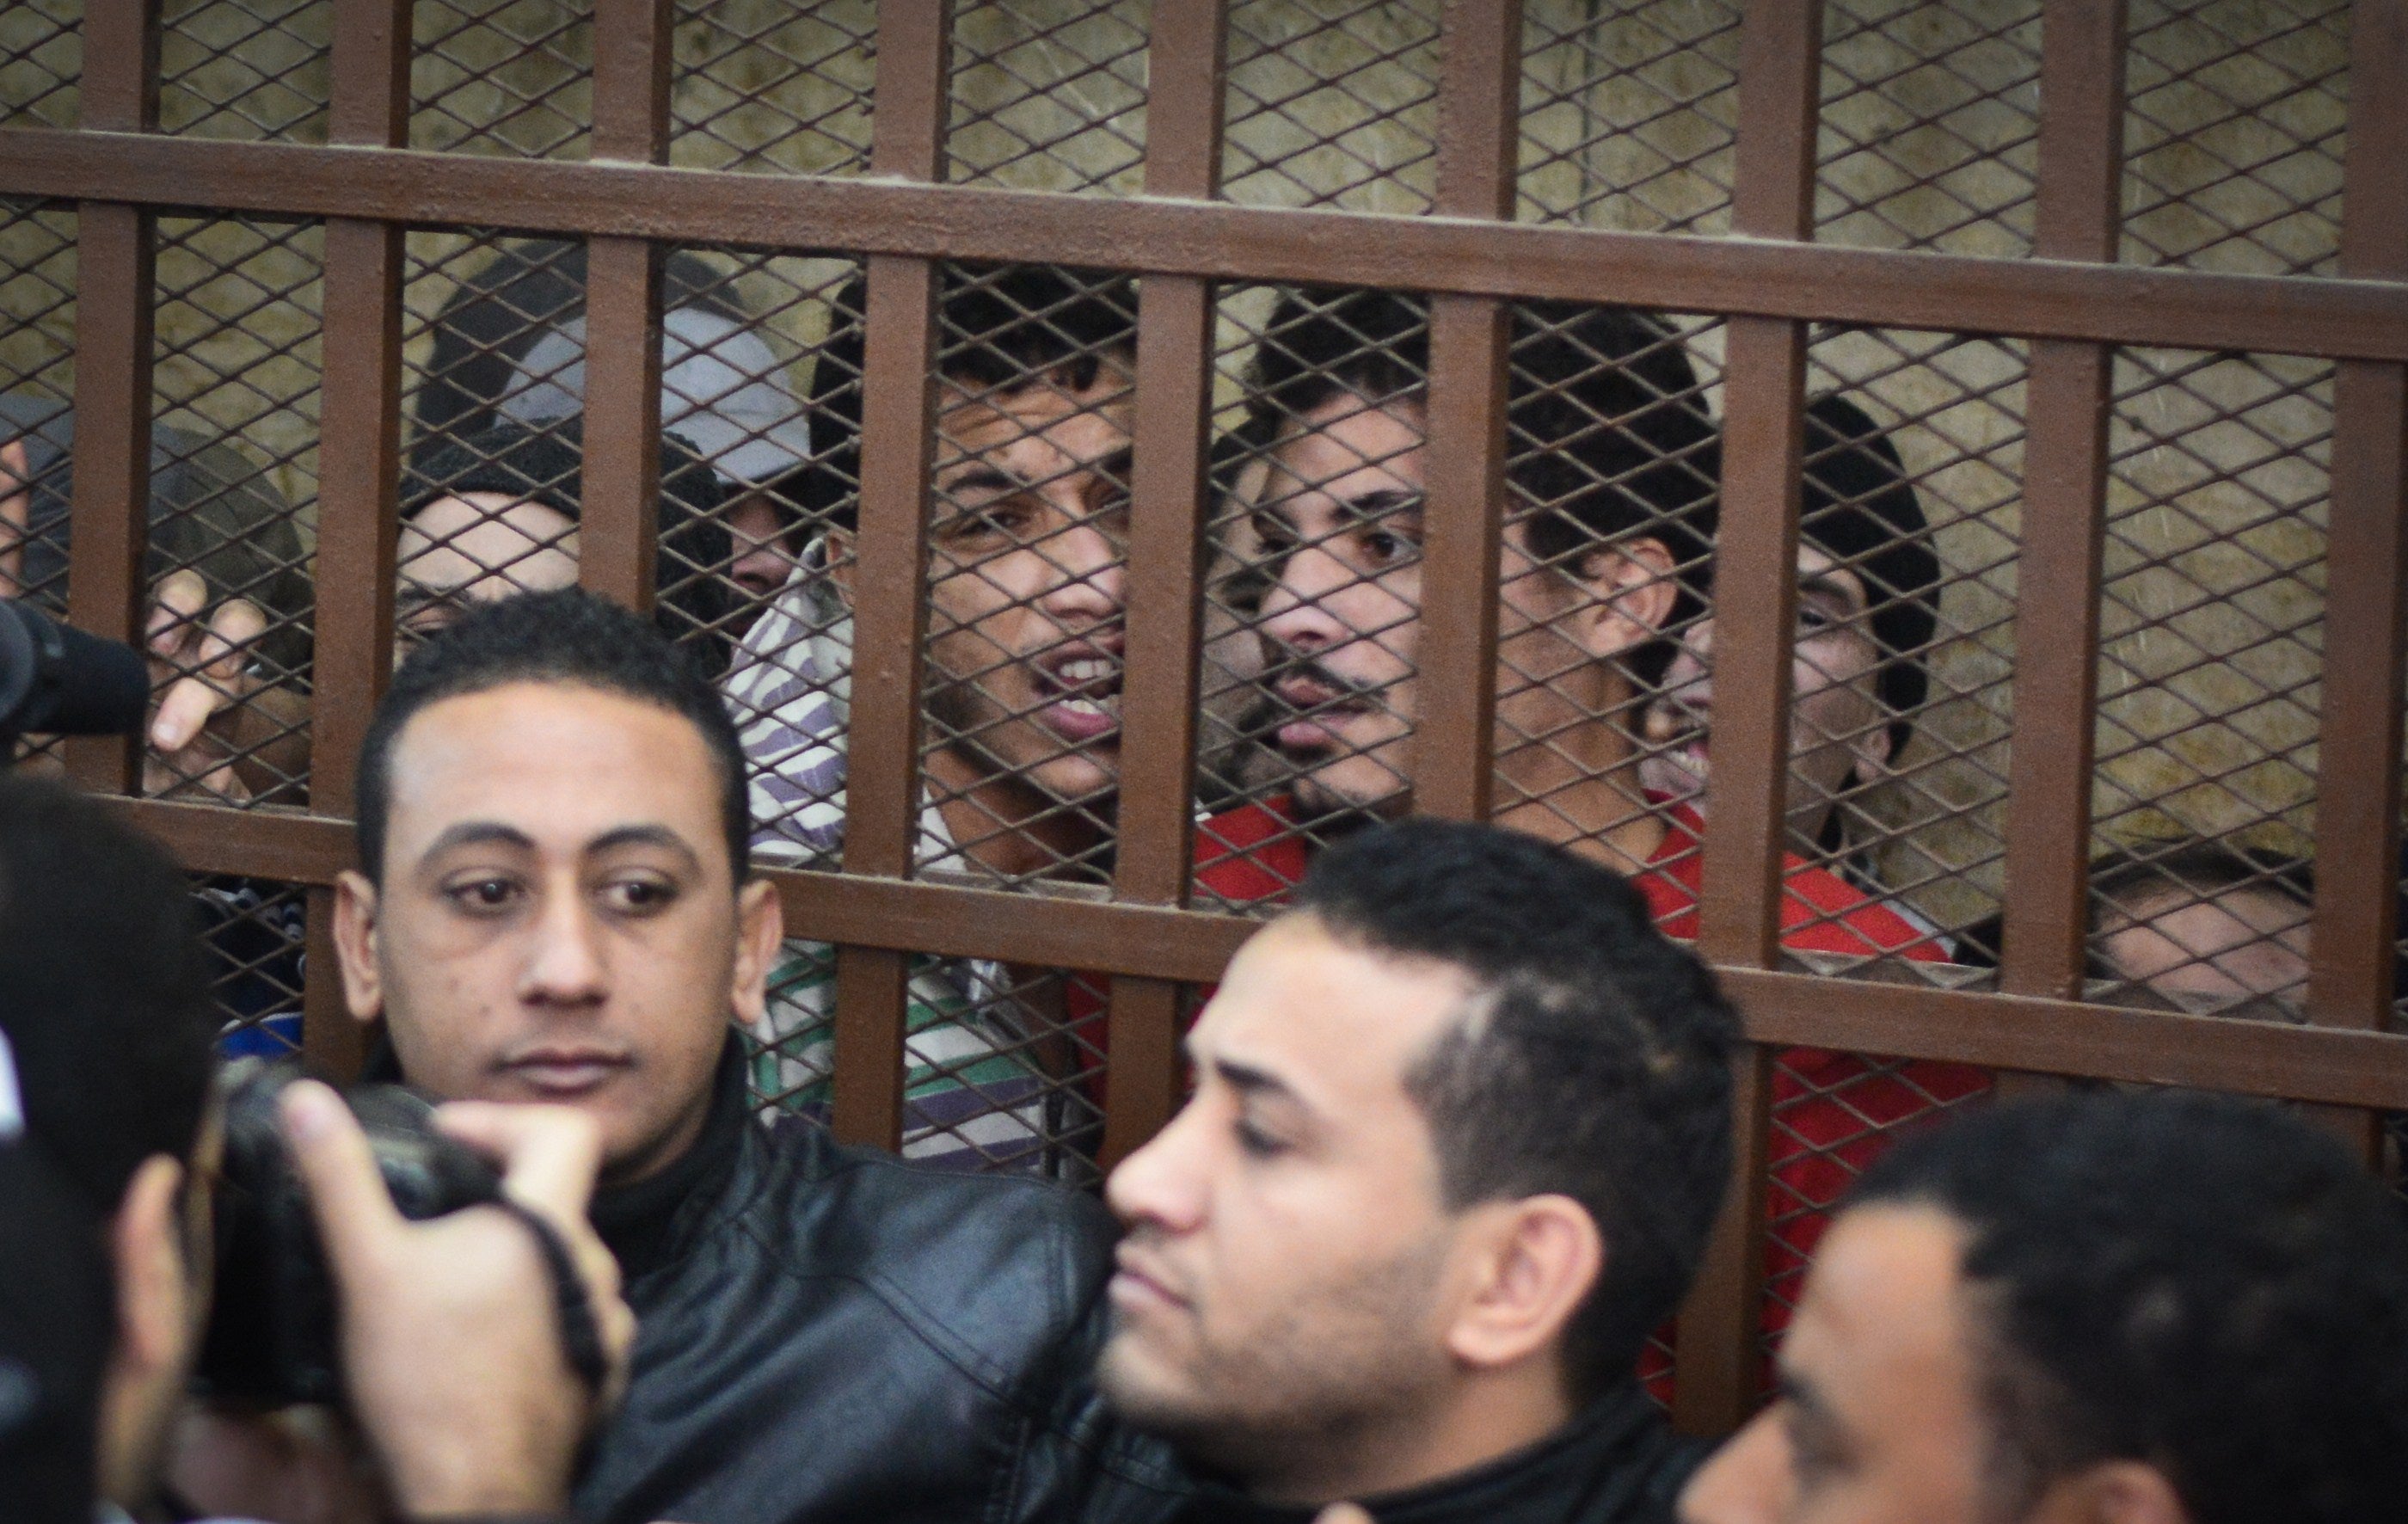 Twenty-six men accused of 'debauchery' are imprisoned in Cairo